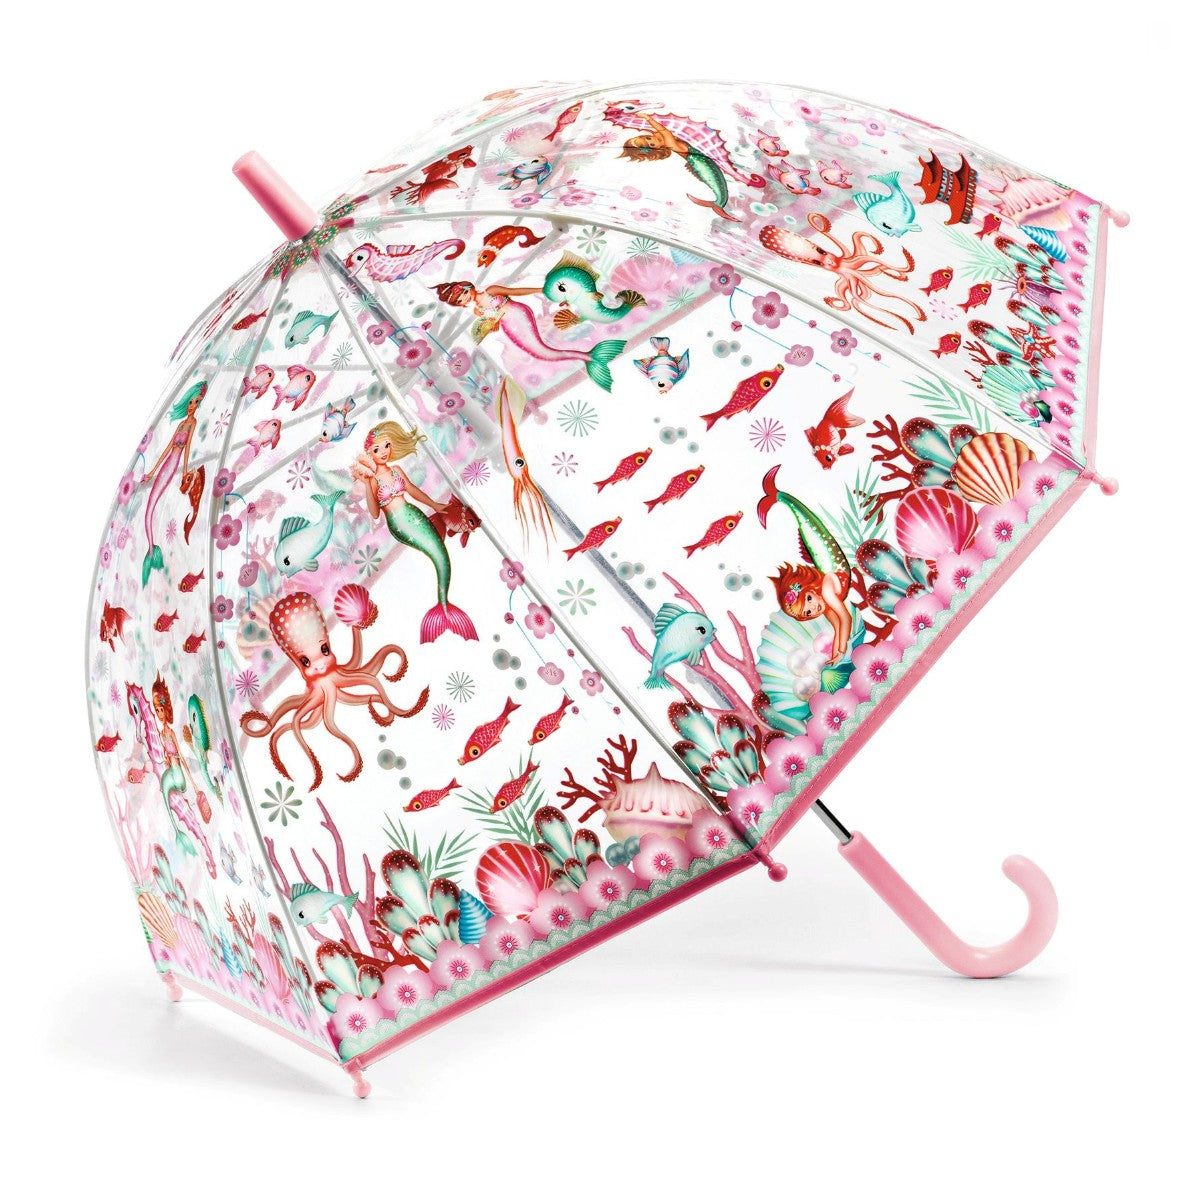 Djeco paraply, lille, havfruer